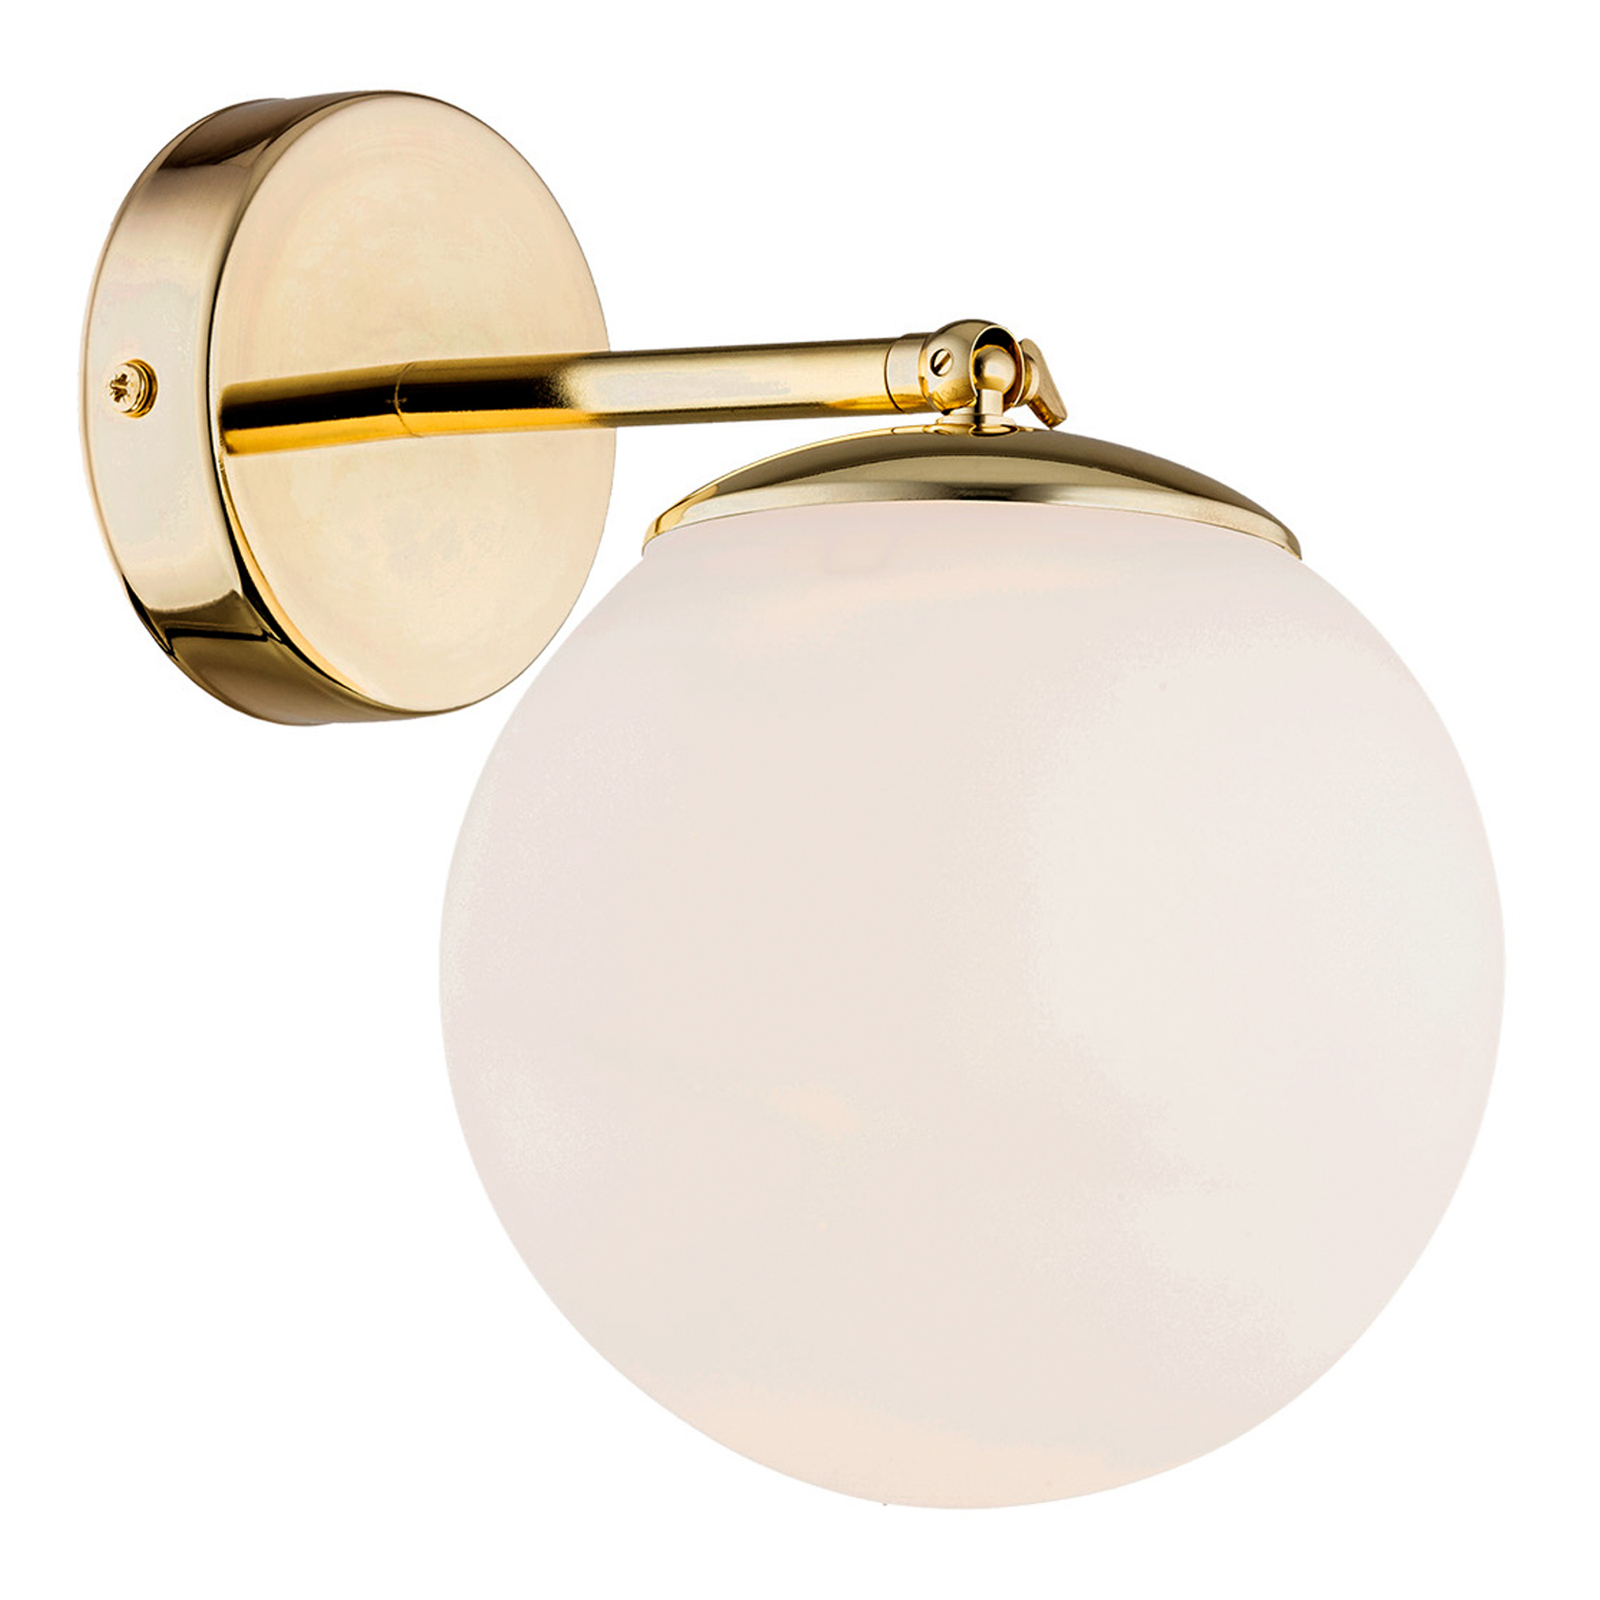 Sala wall lamp spherical glass lampshade, one-bulb